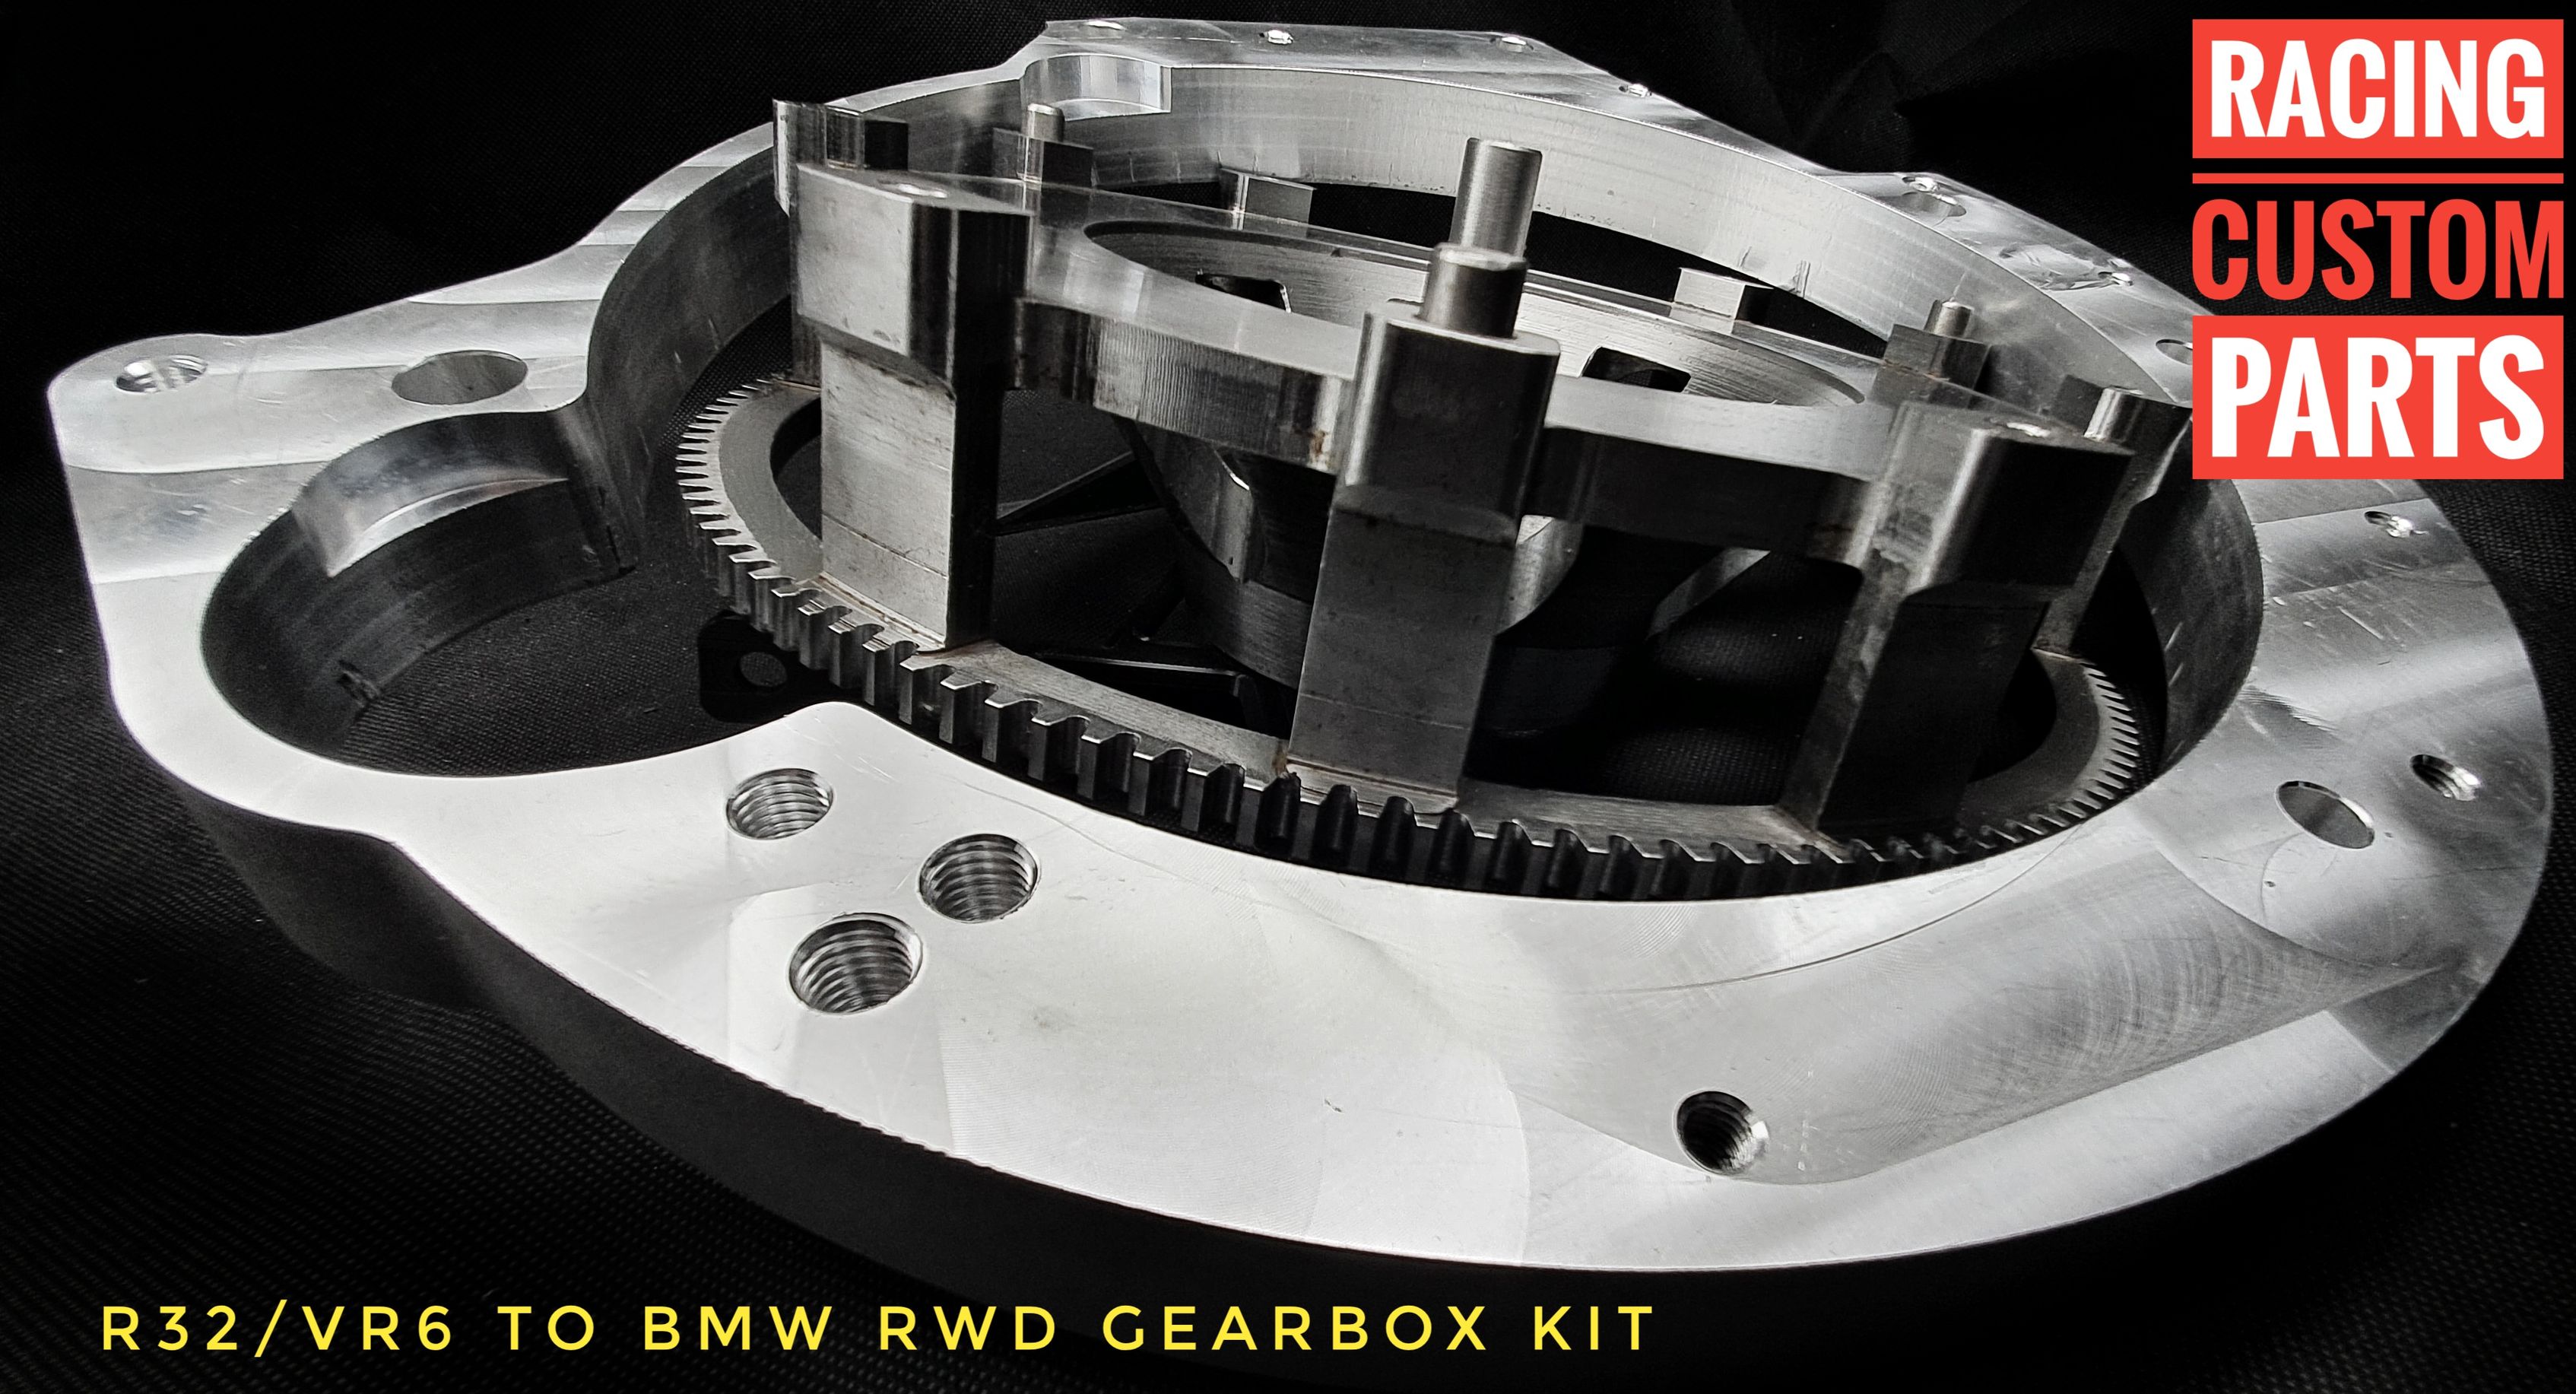 r32 vr6 bmw rwd gearbox conversion kit billet cnc racing custom parts